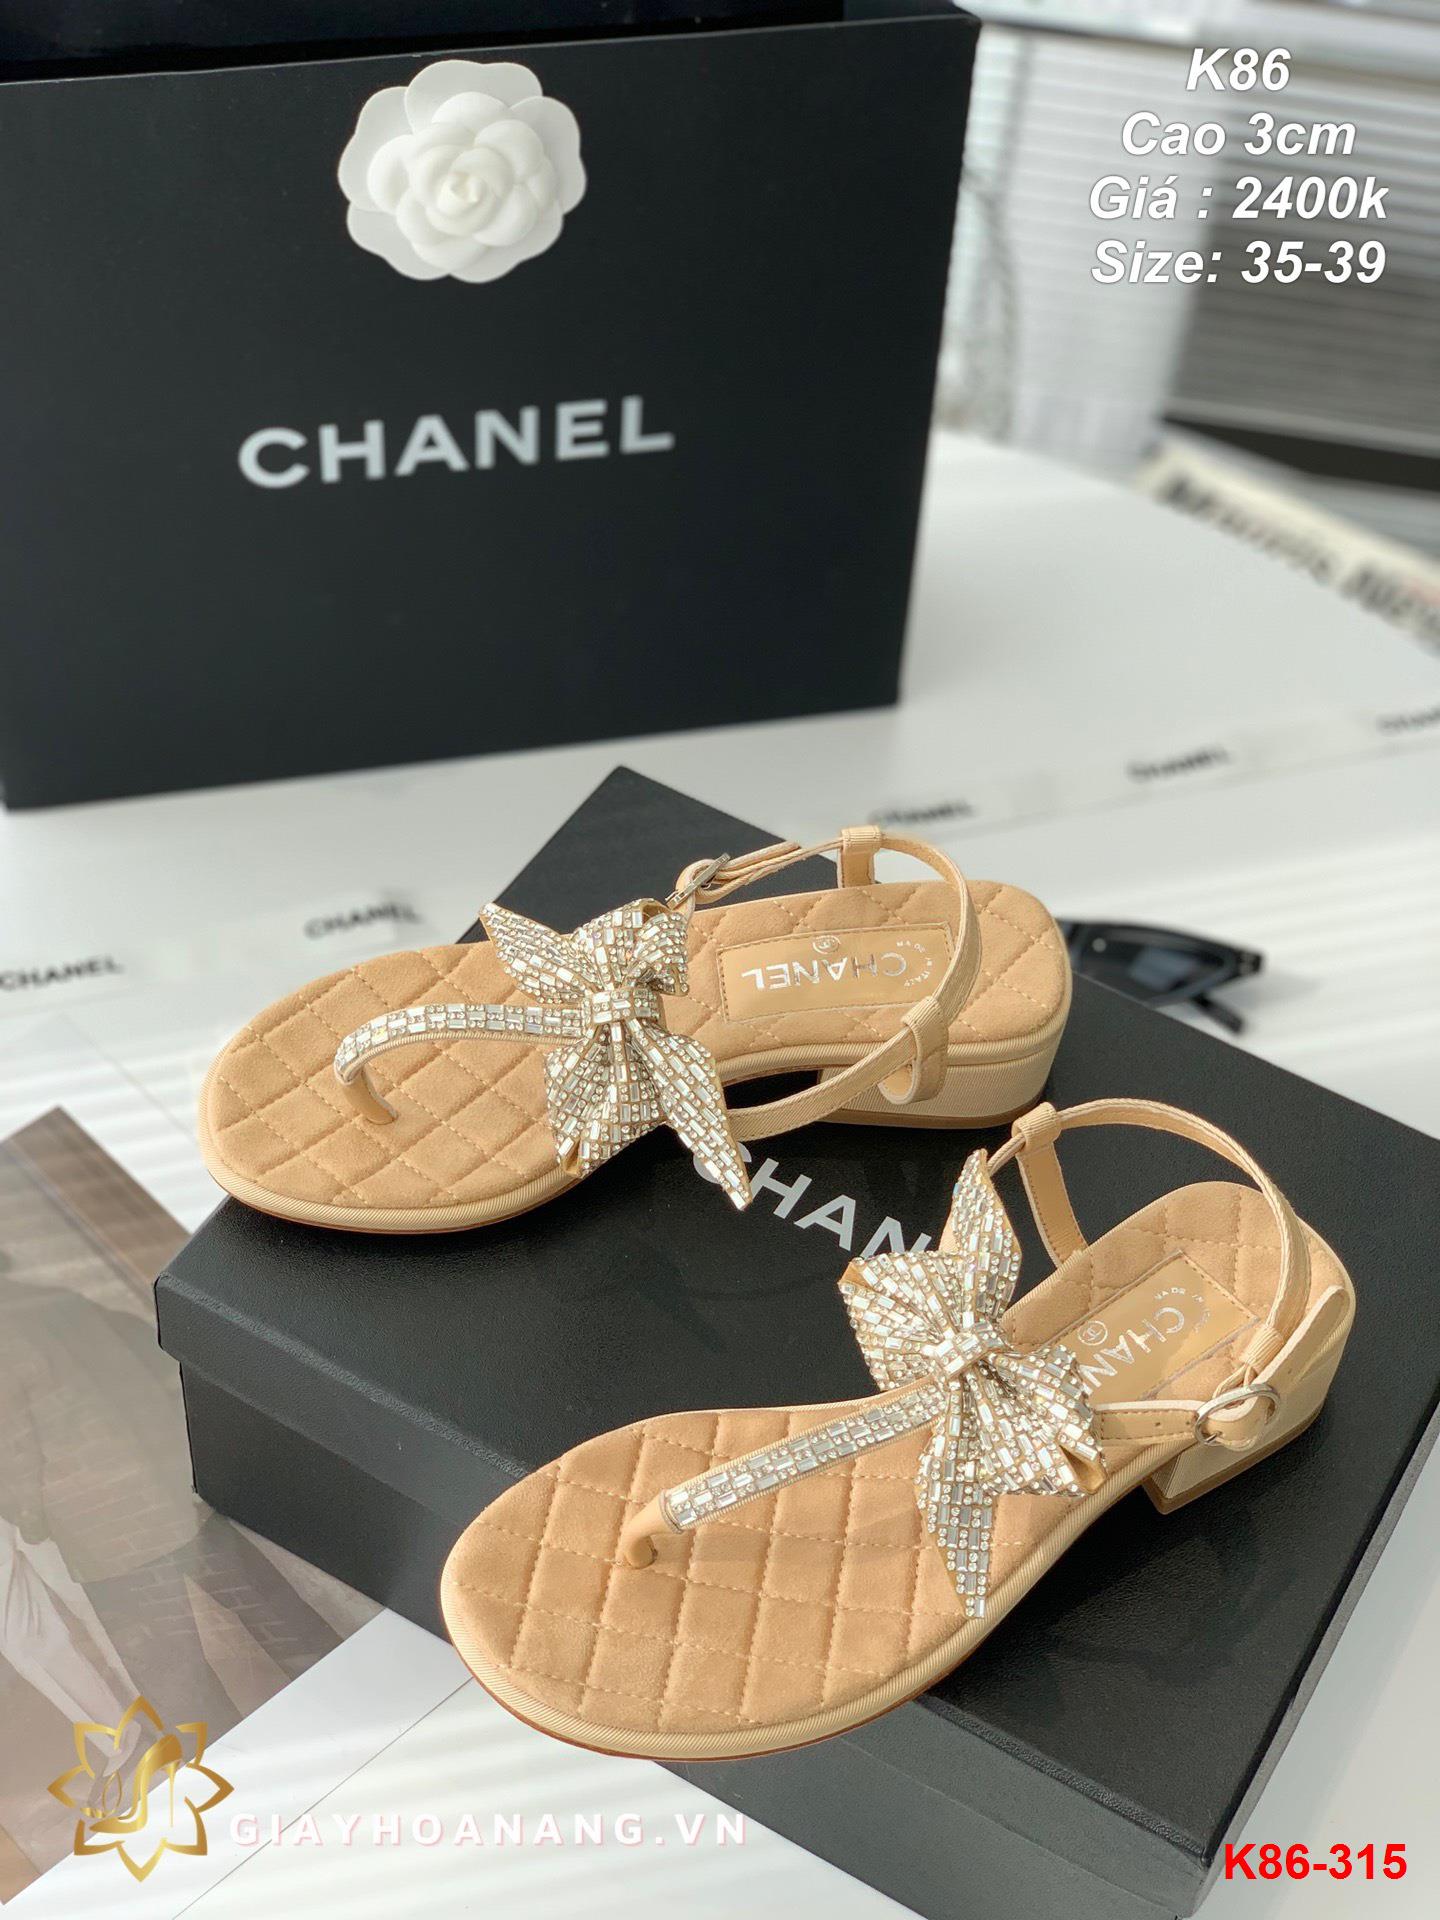 K86-315 Chanel sandal cao 3cm siêu cấp